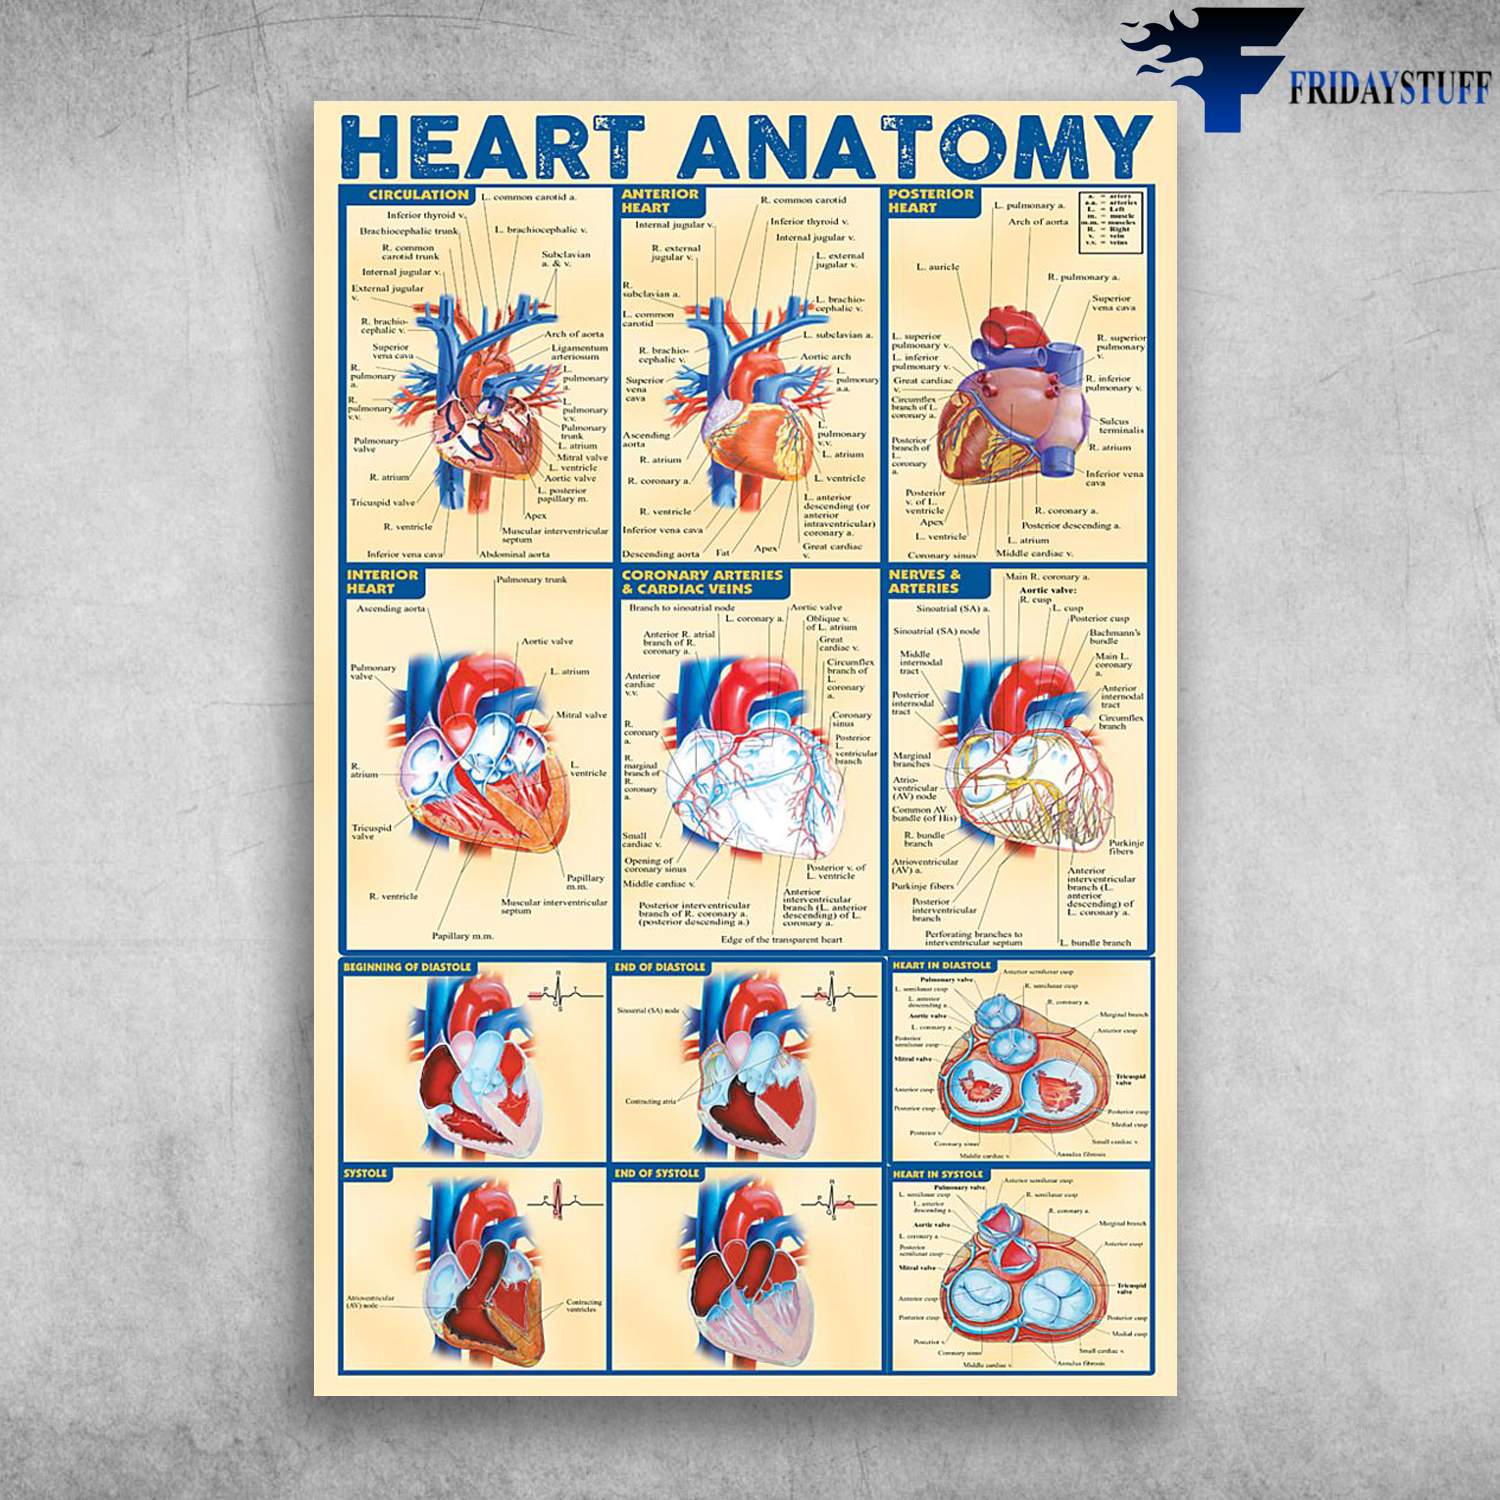 Heart Anatomy Coronary Arteries And Cardiac Veins